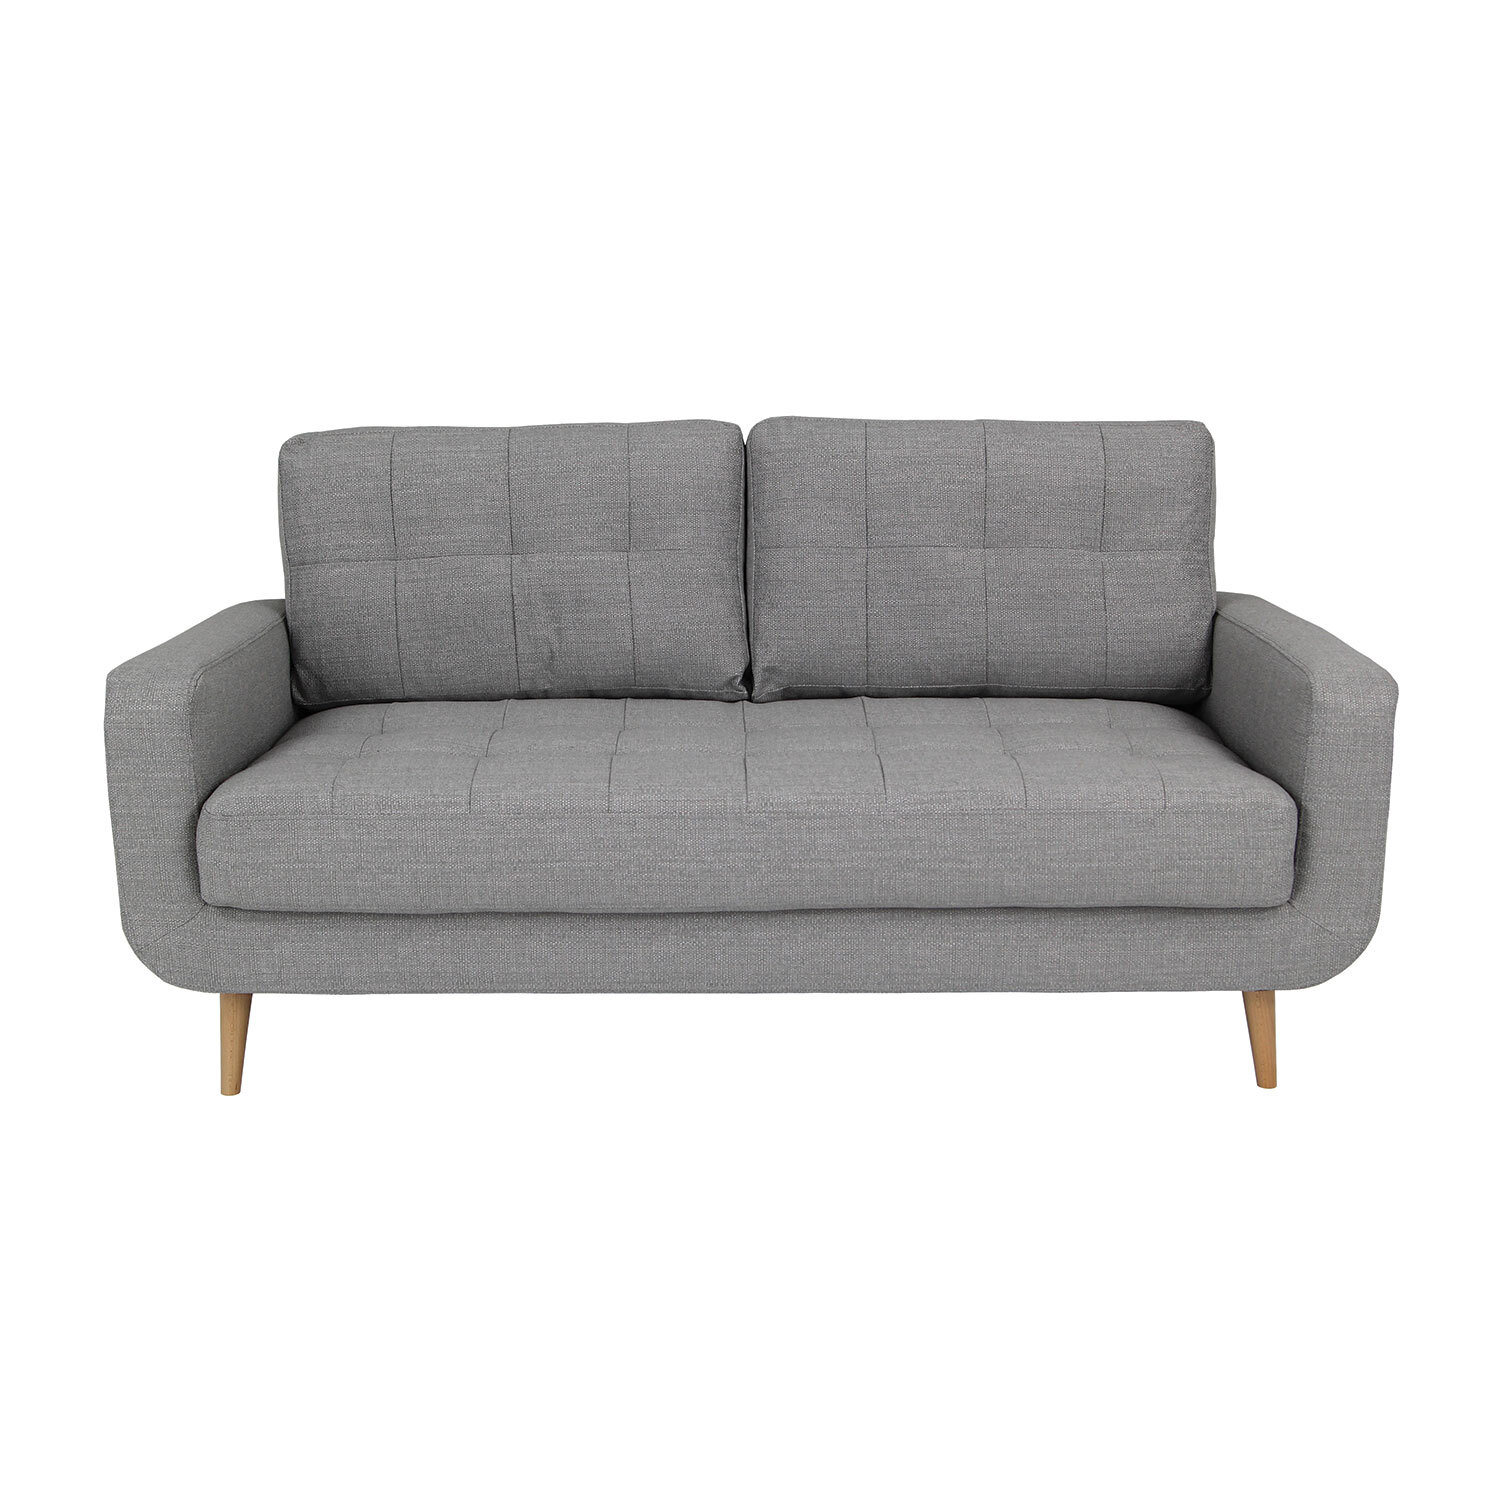 Isabella 3 Seater Grey Fabric Sofa Image 2